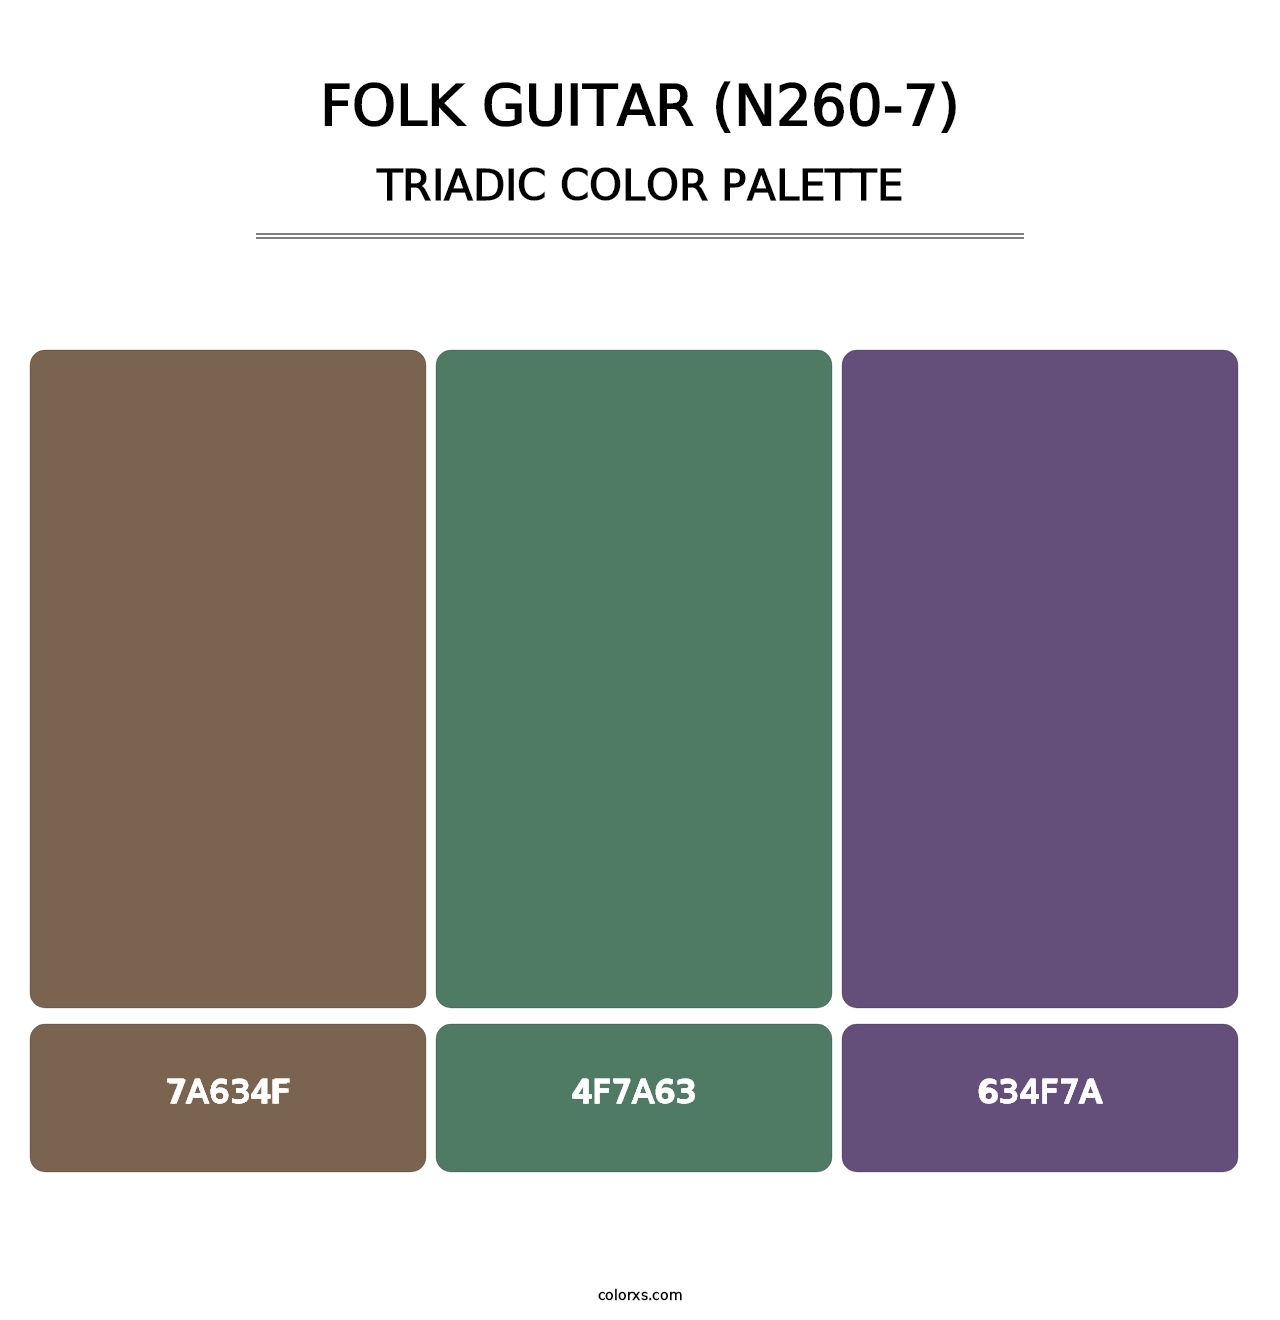 Folk Guitar (N260-7) - Triadic Color Palette